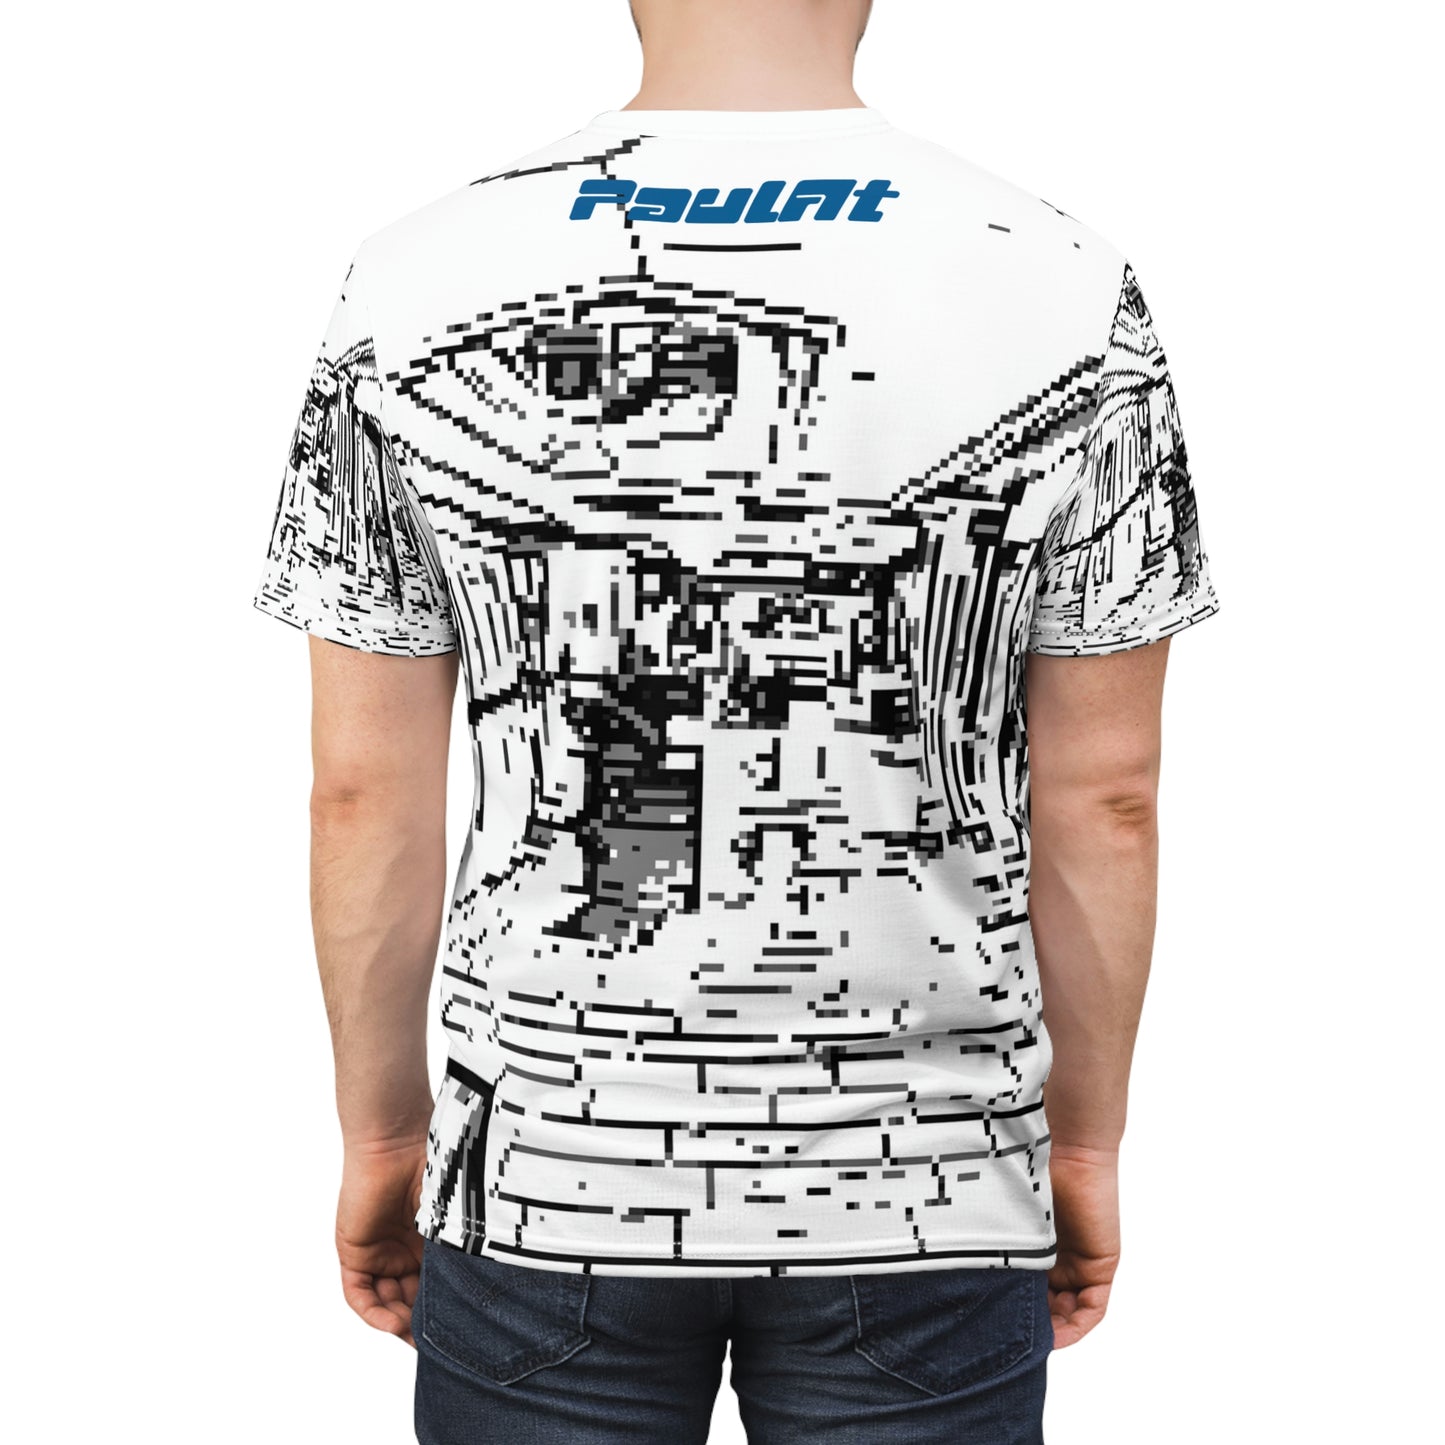 Macintosh Mall Unisex T-Shirt